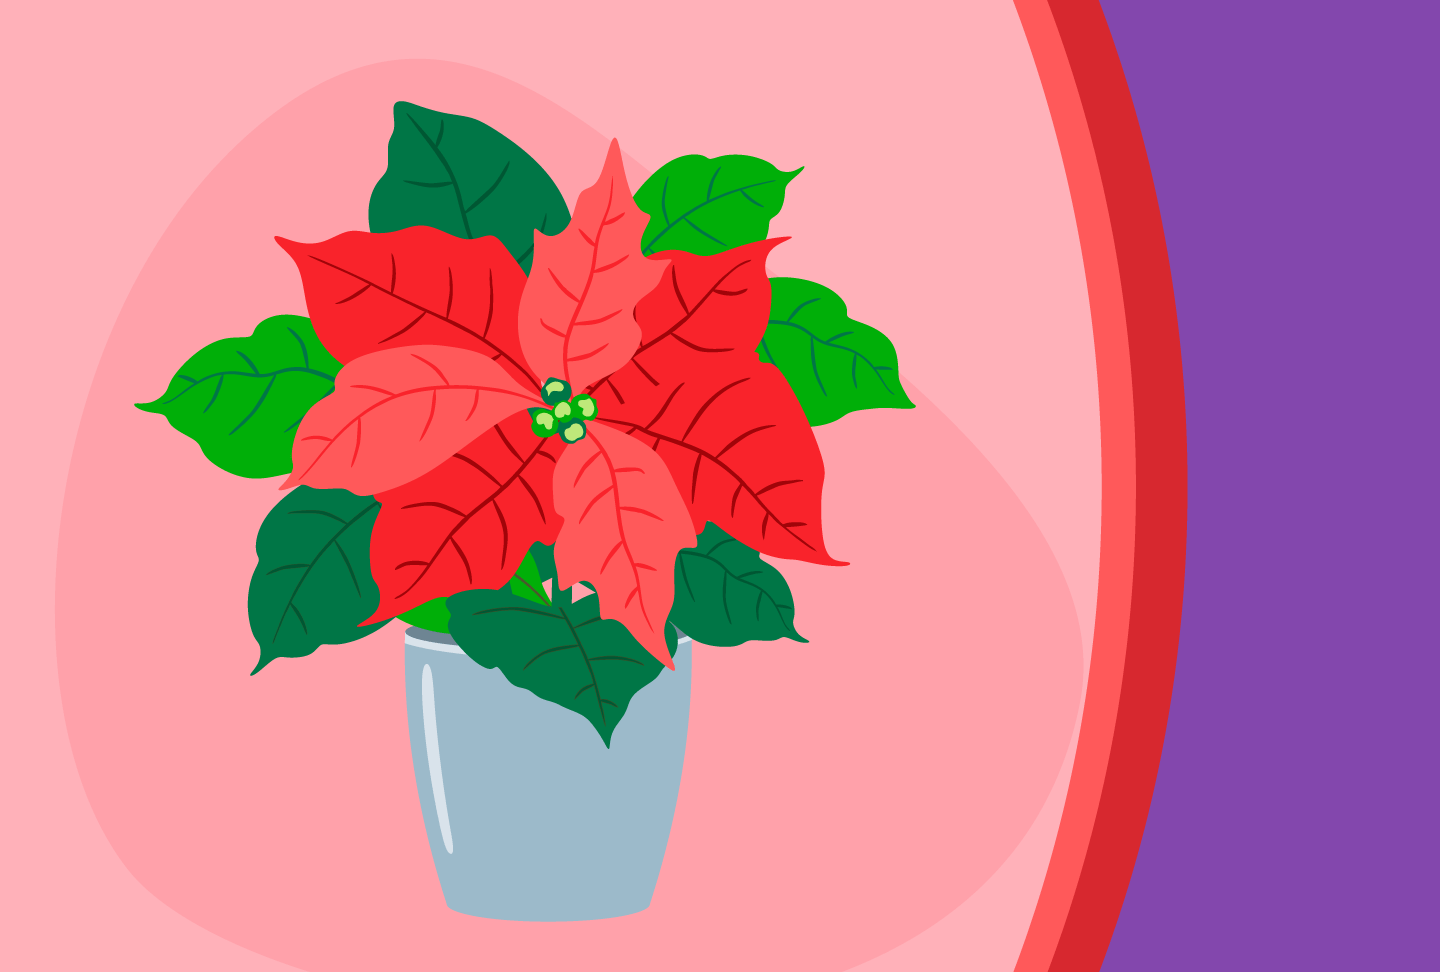 Illustration of a poinsettia plant